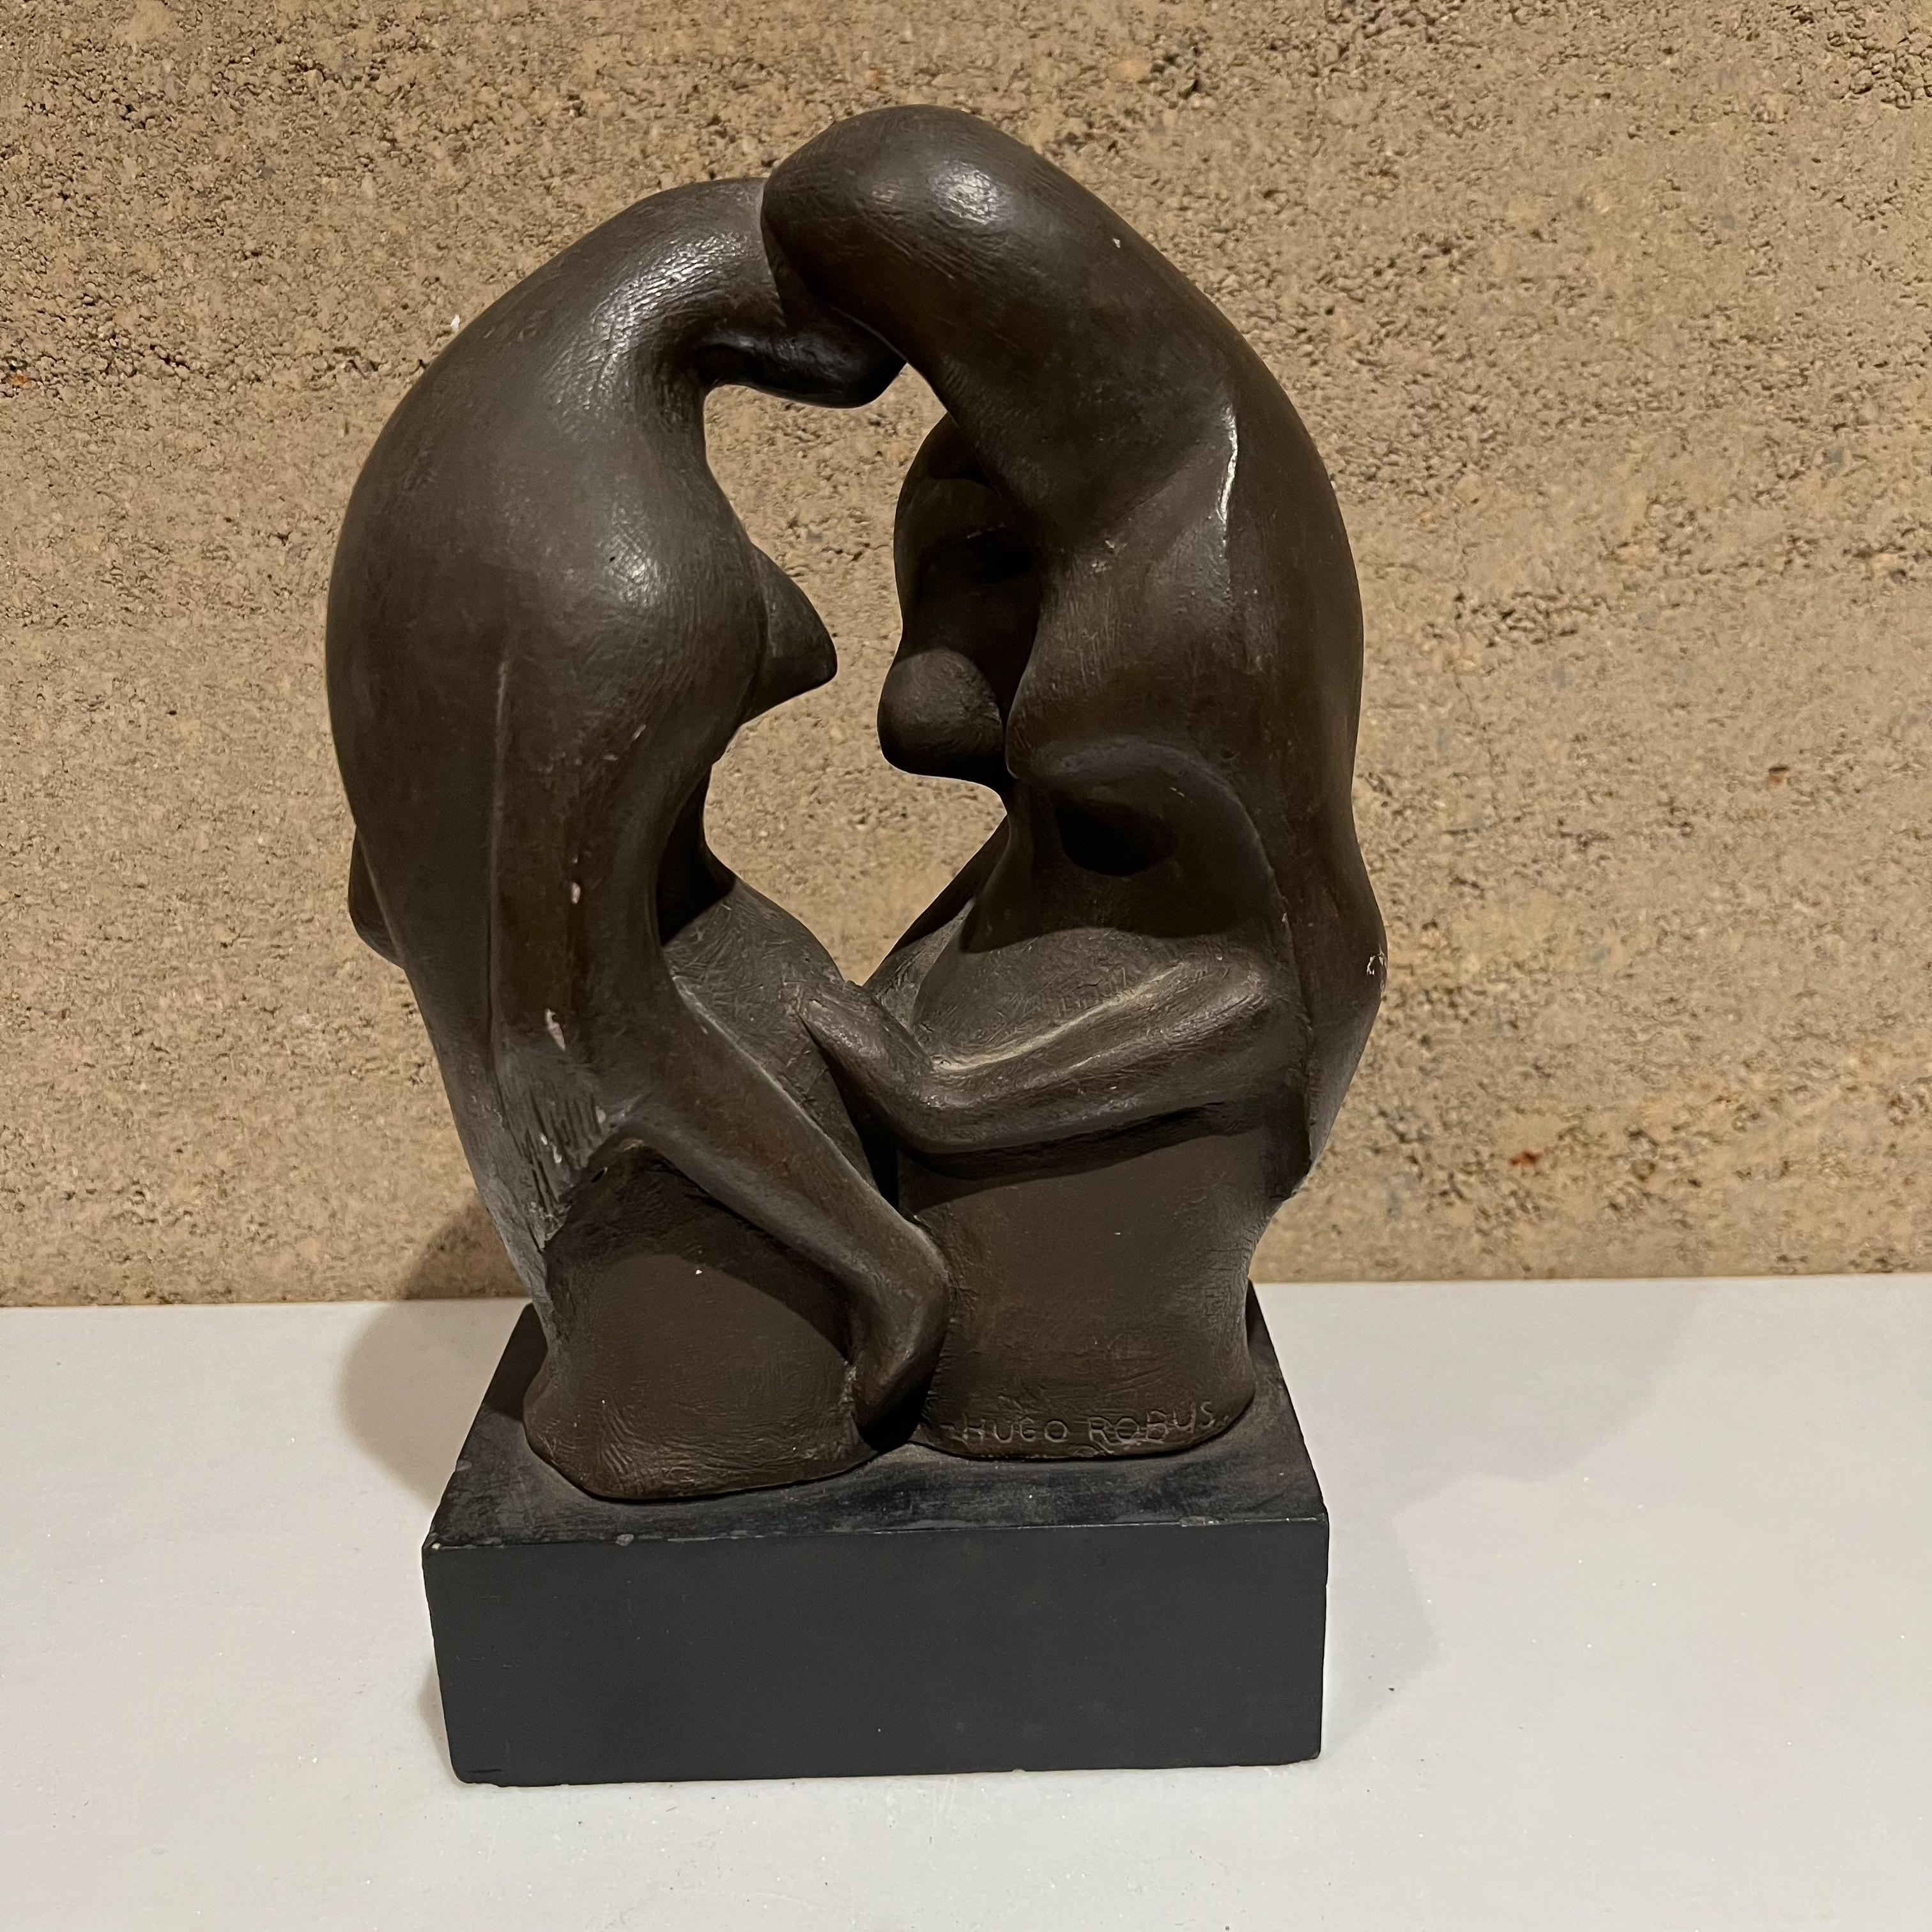 Mid-20th Century 1960s Hugo Robus Modernist Art Table Sculpture Women Embracing Bronze Plaster